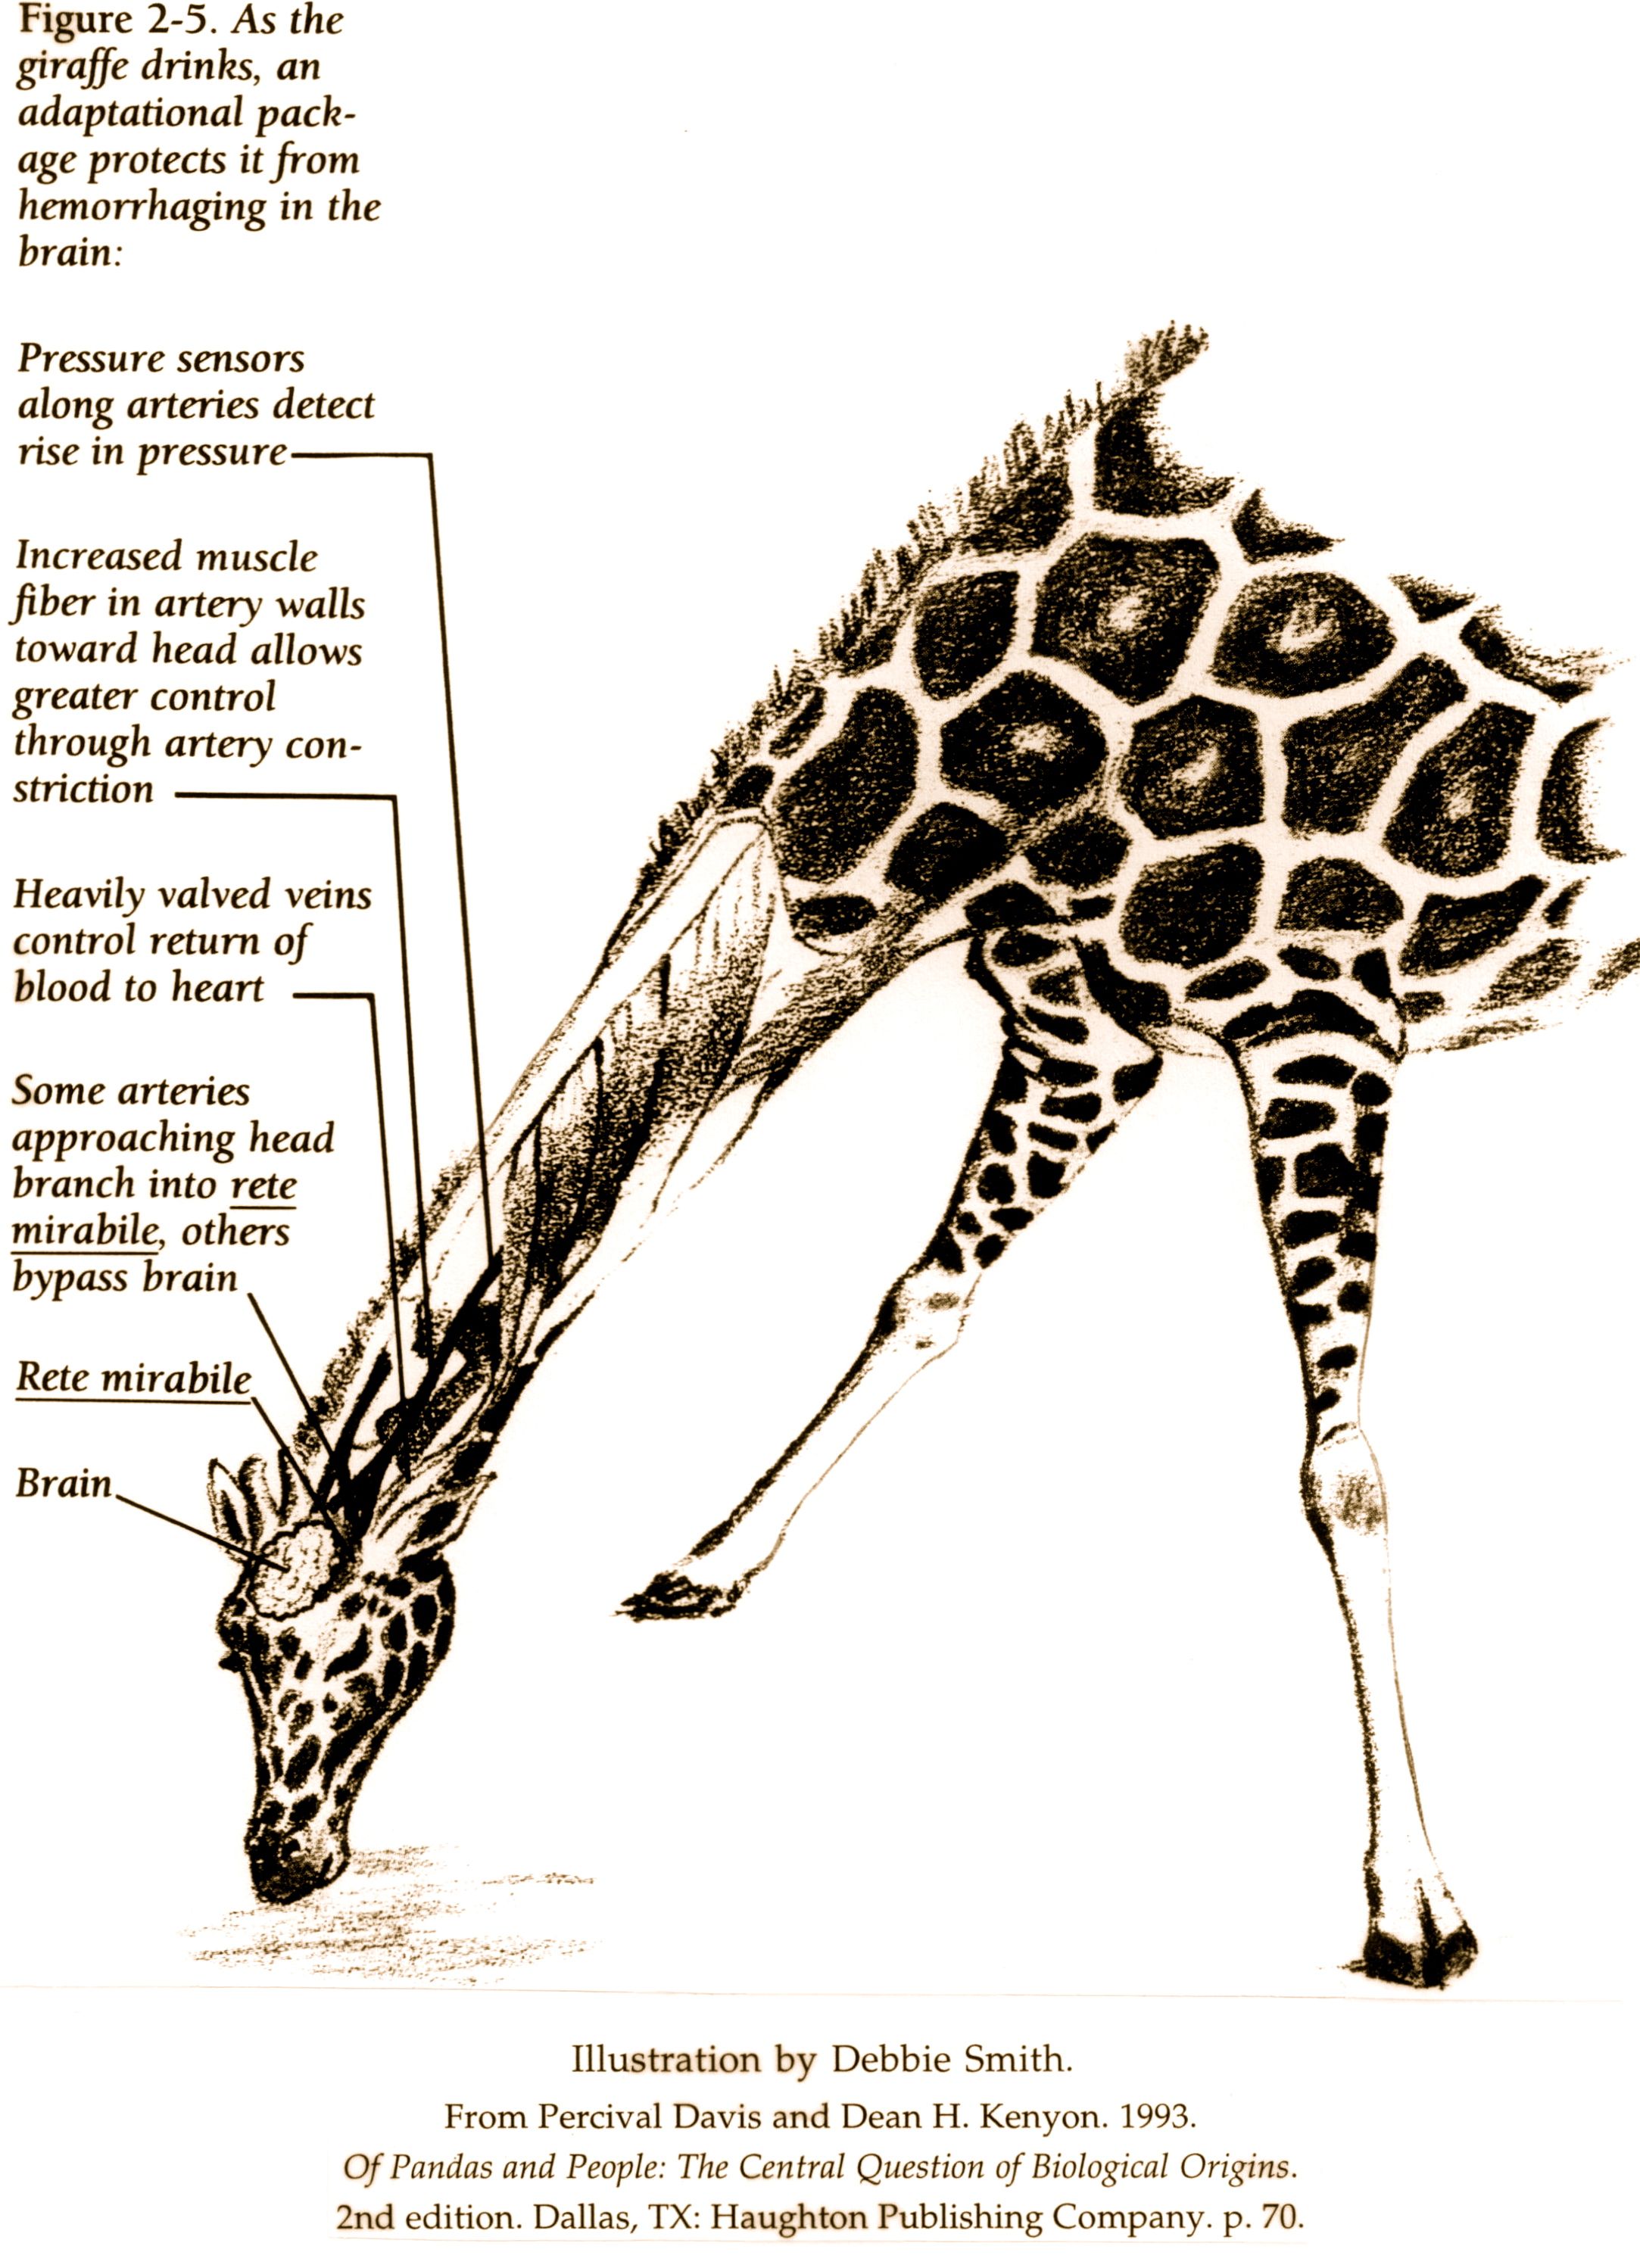 giraffe text art copy and paste